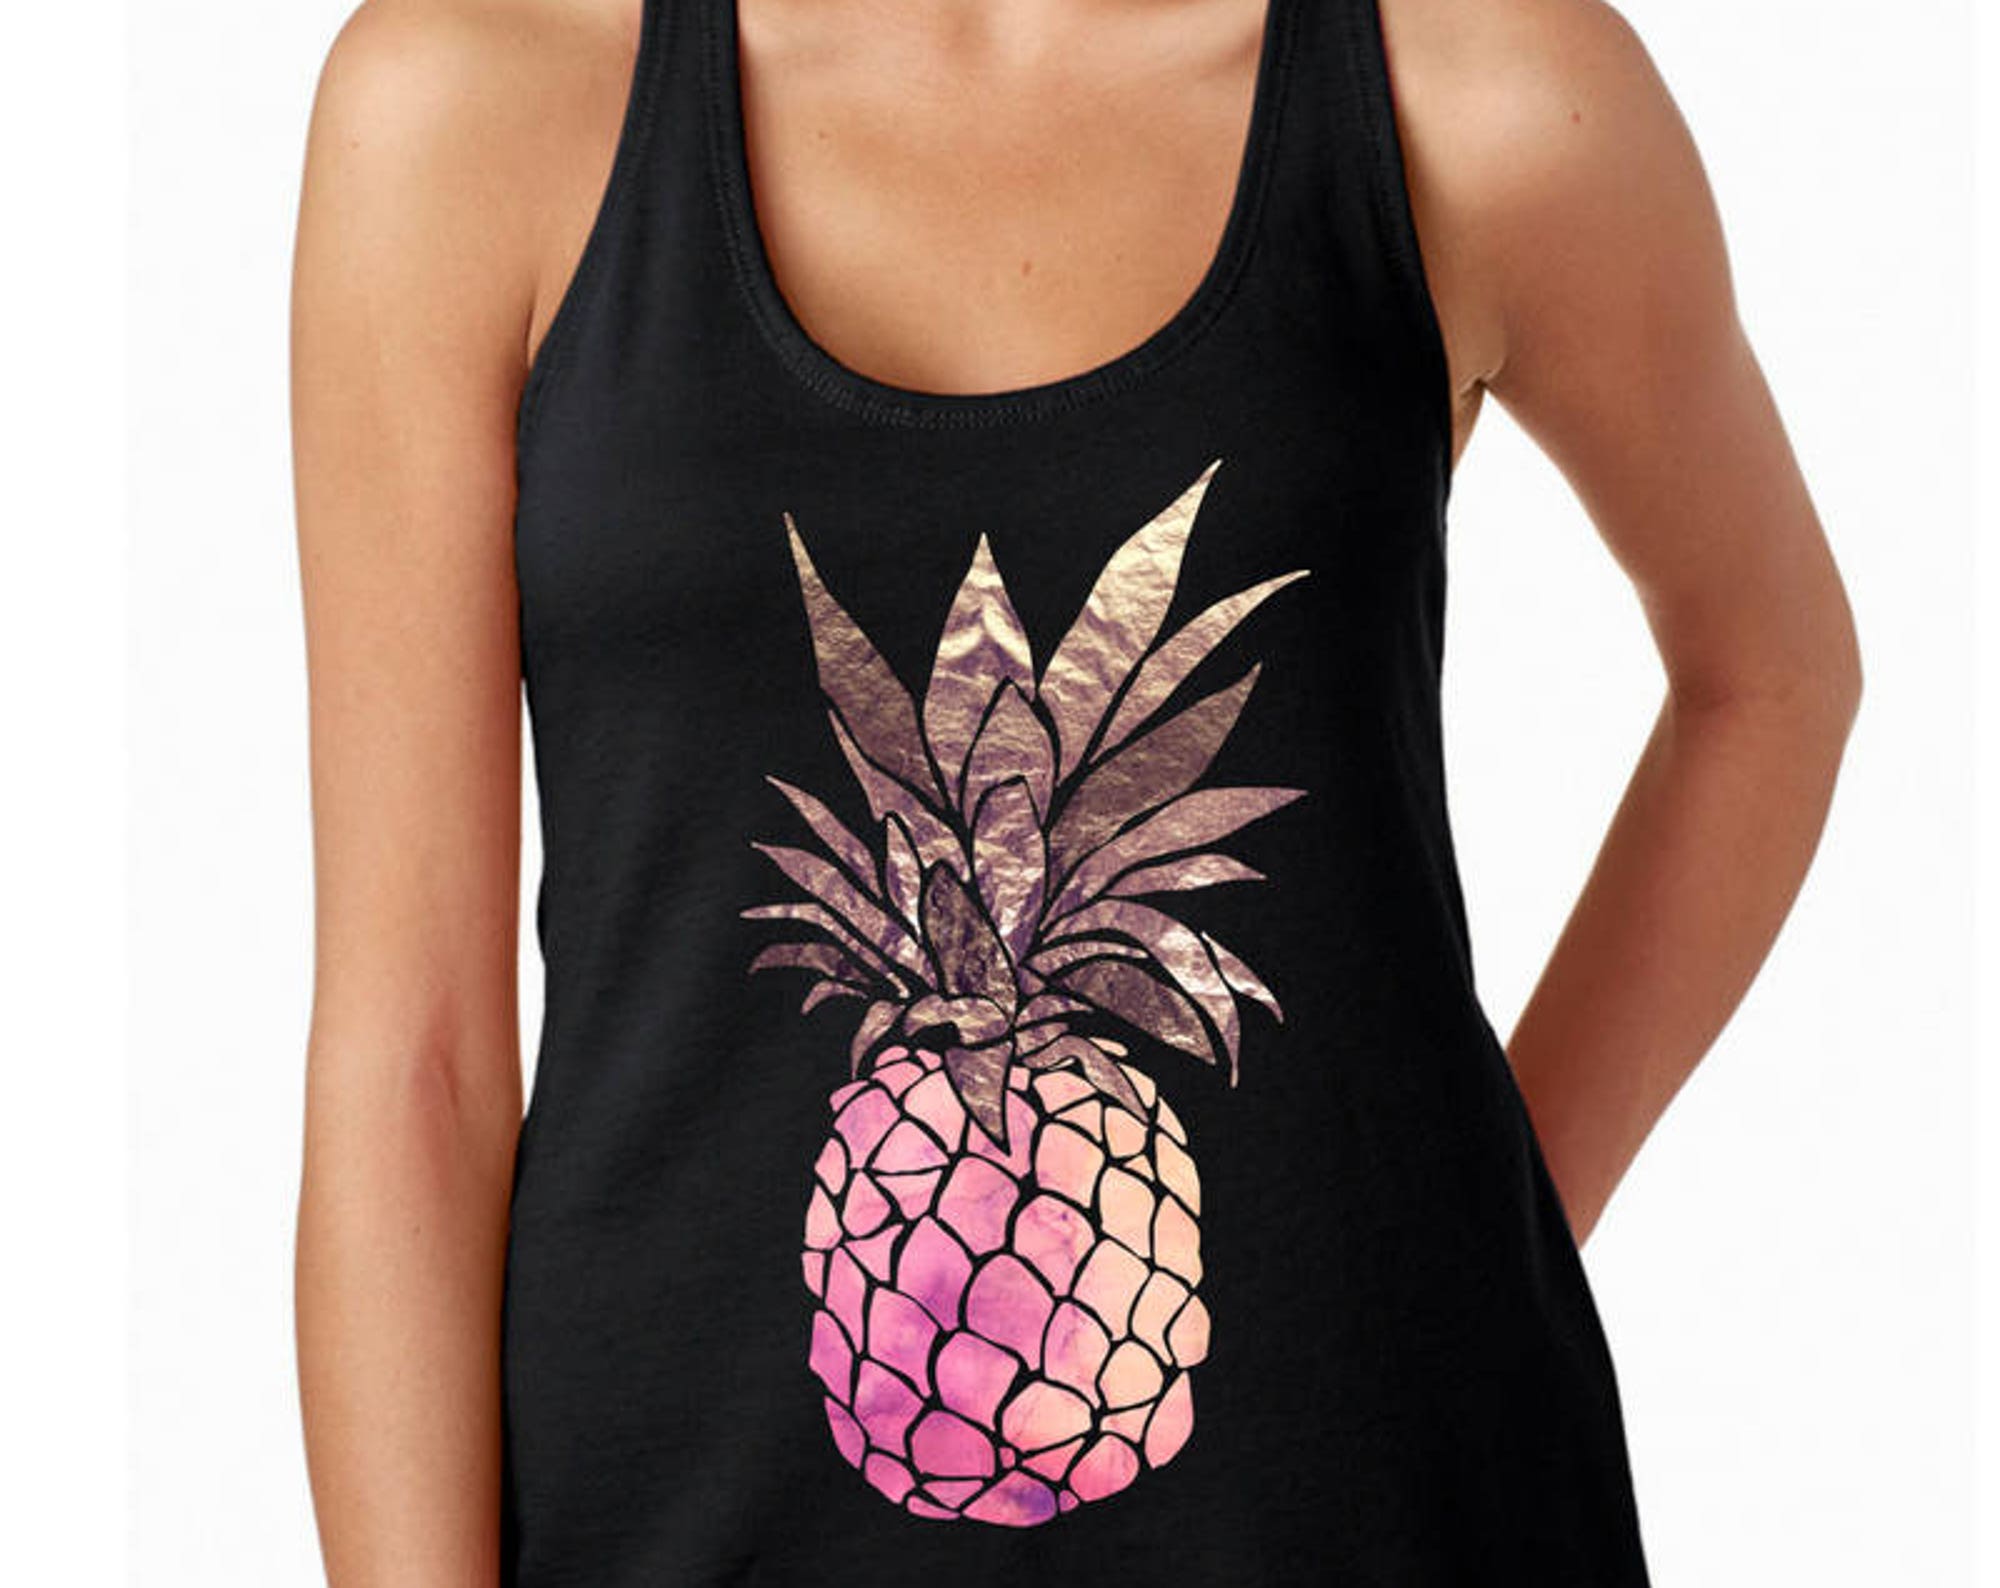 Pineapple shirt for women, be a pineapple shirt